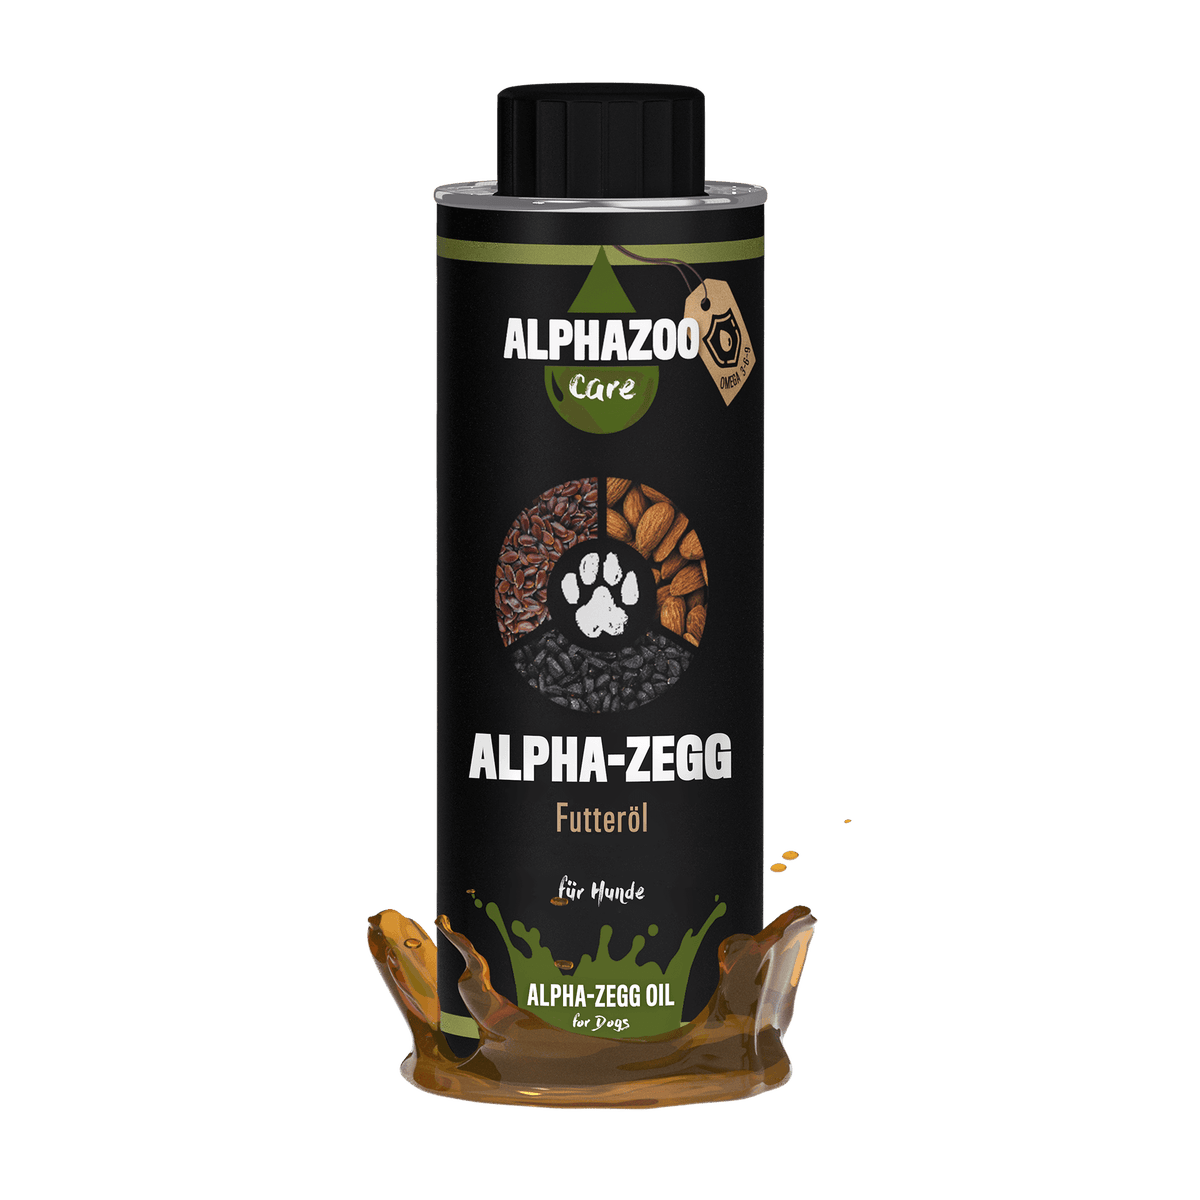 ALPHAZOO Alpha-Zegg Futteröl 250ml für Hunde I Begleitung im Frühling und Sommer